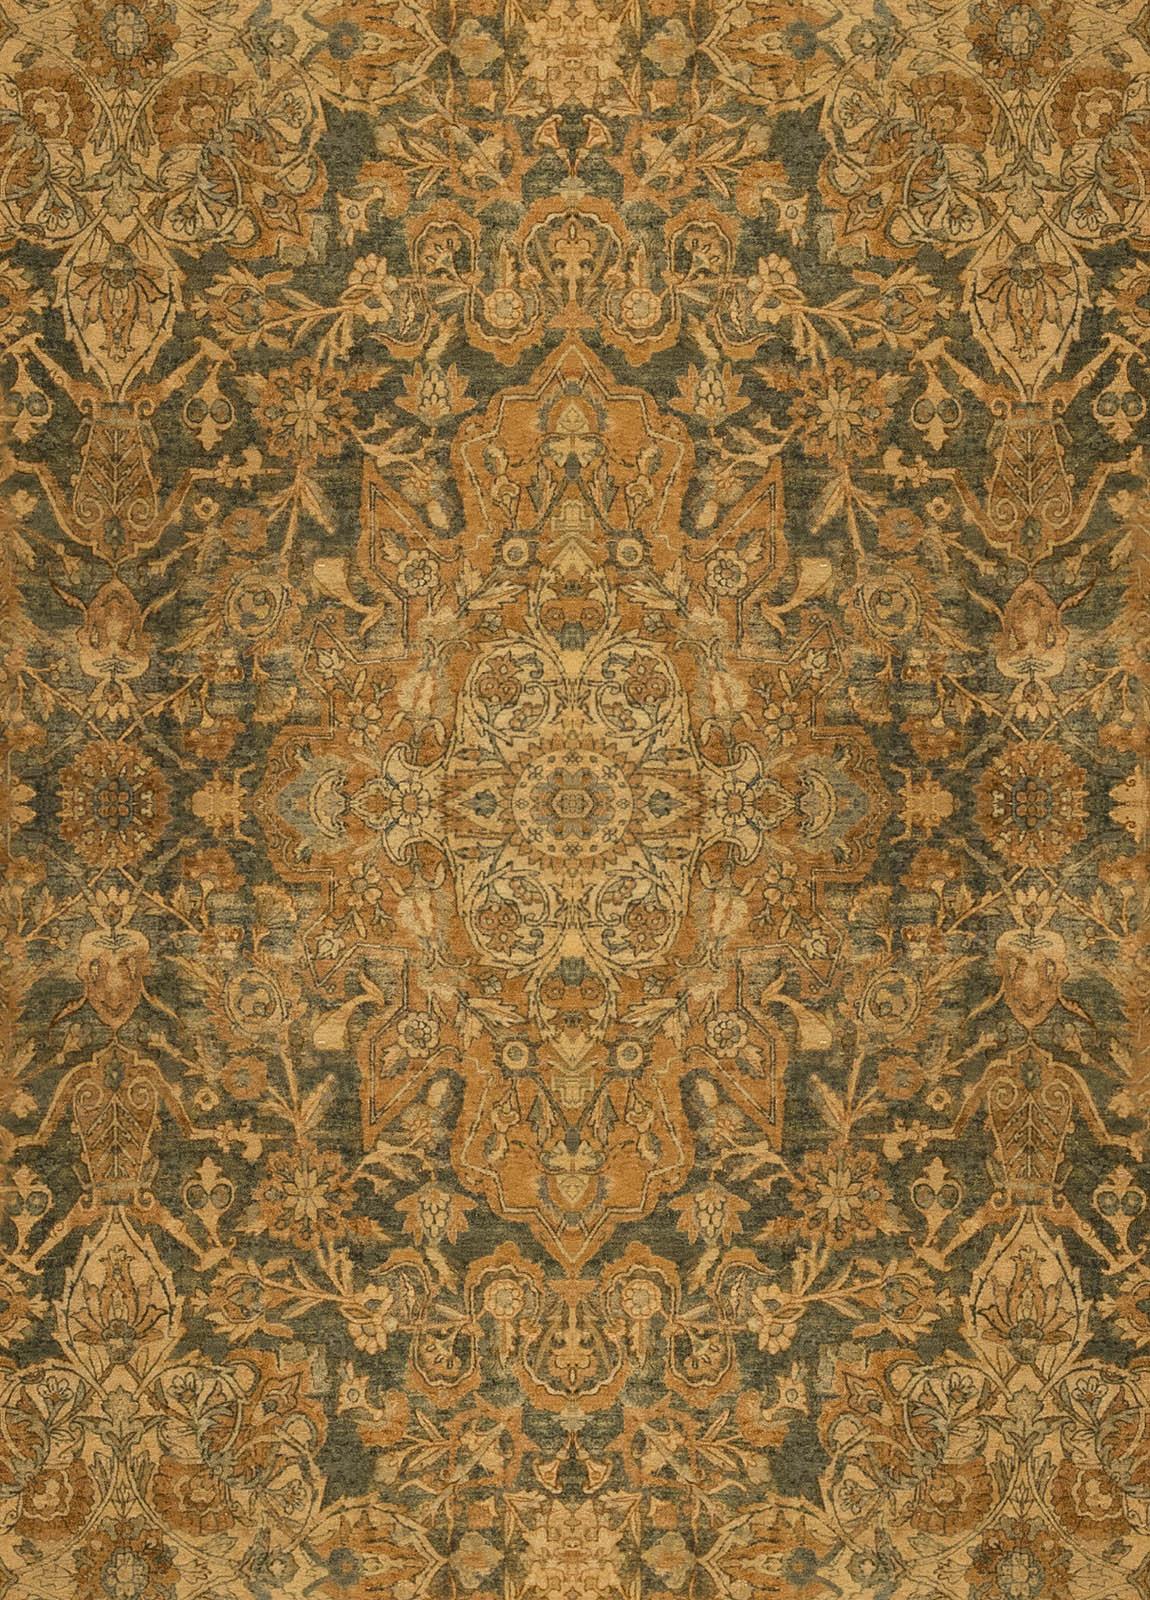 Fine Antique Persian Kirman handmade wool rug
Size: 17'3